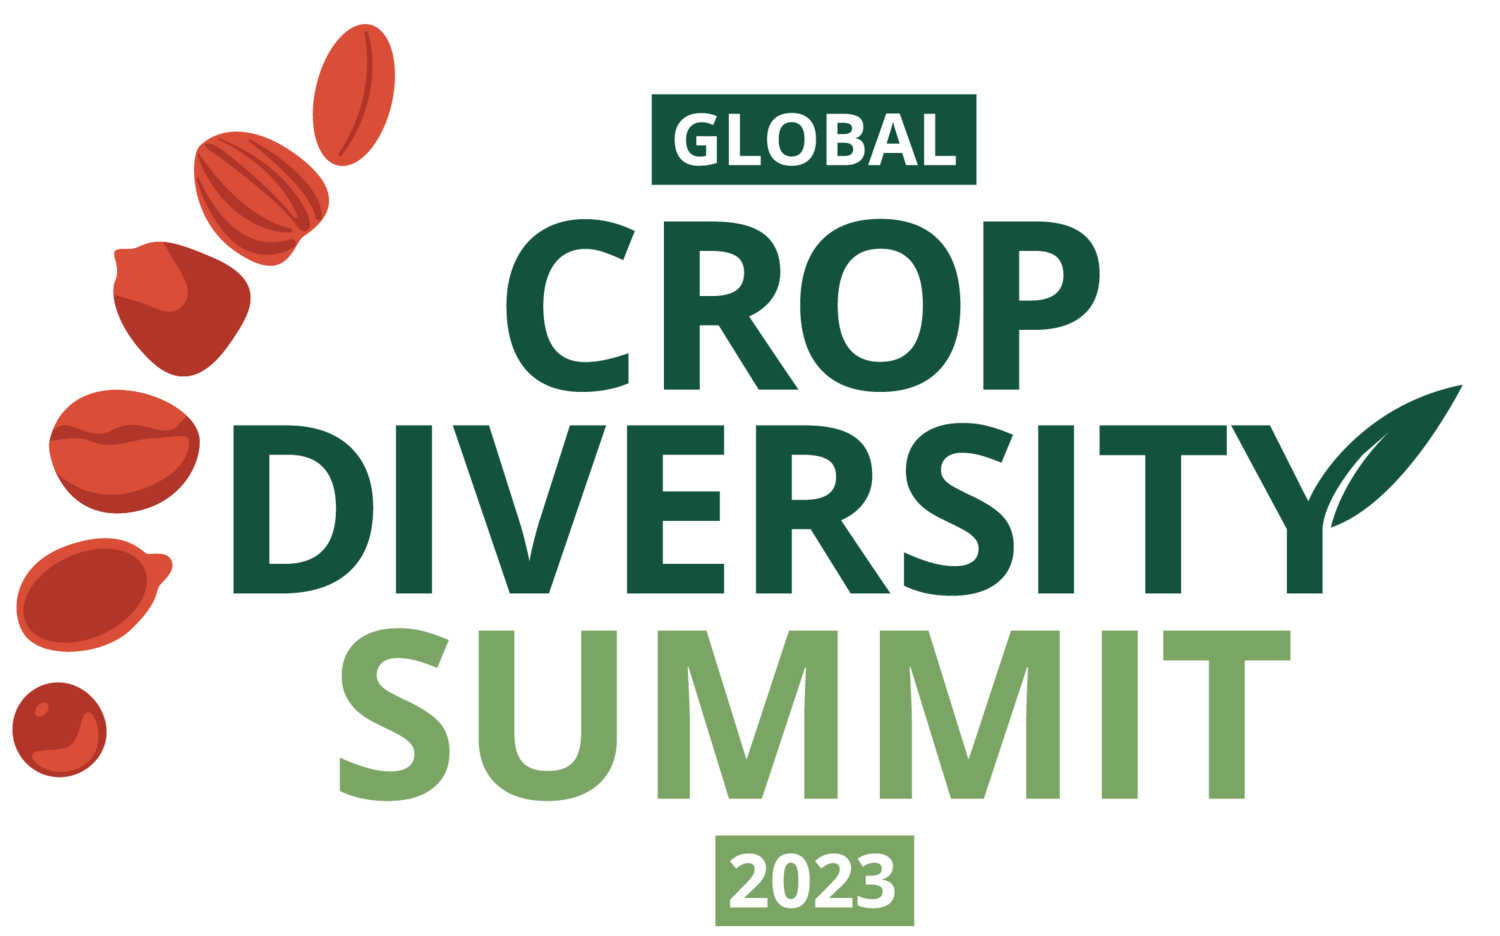 Global Crop Diversity Summit logo